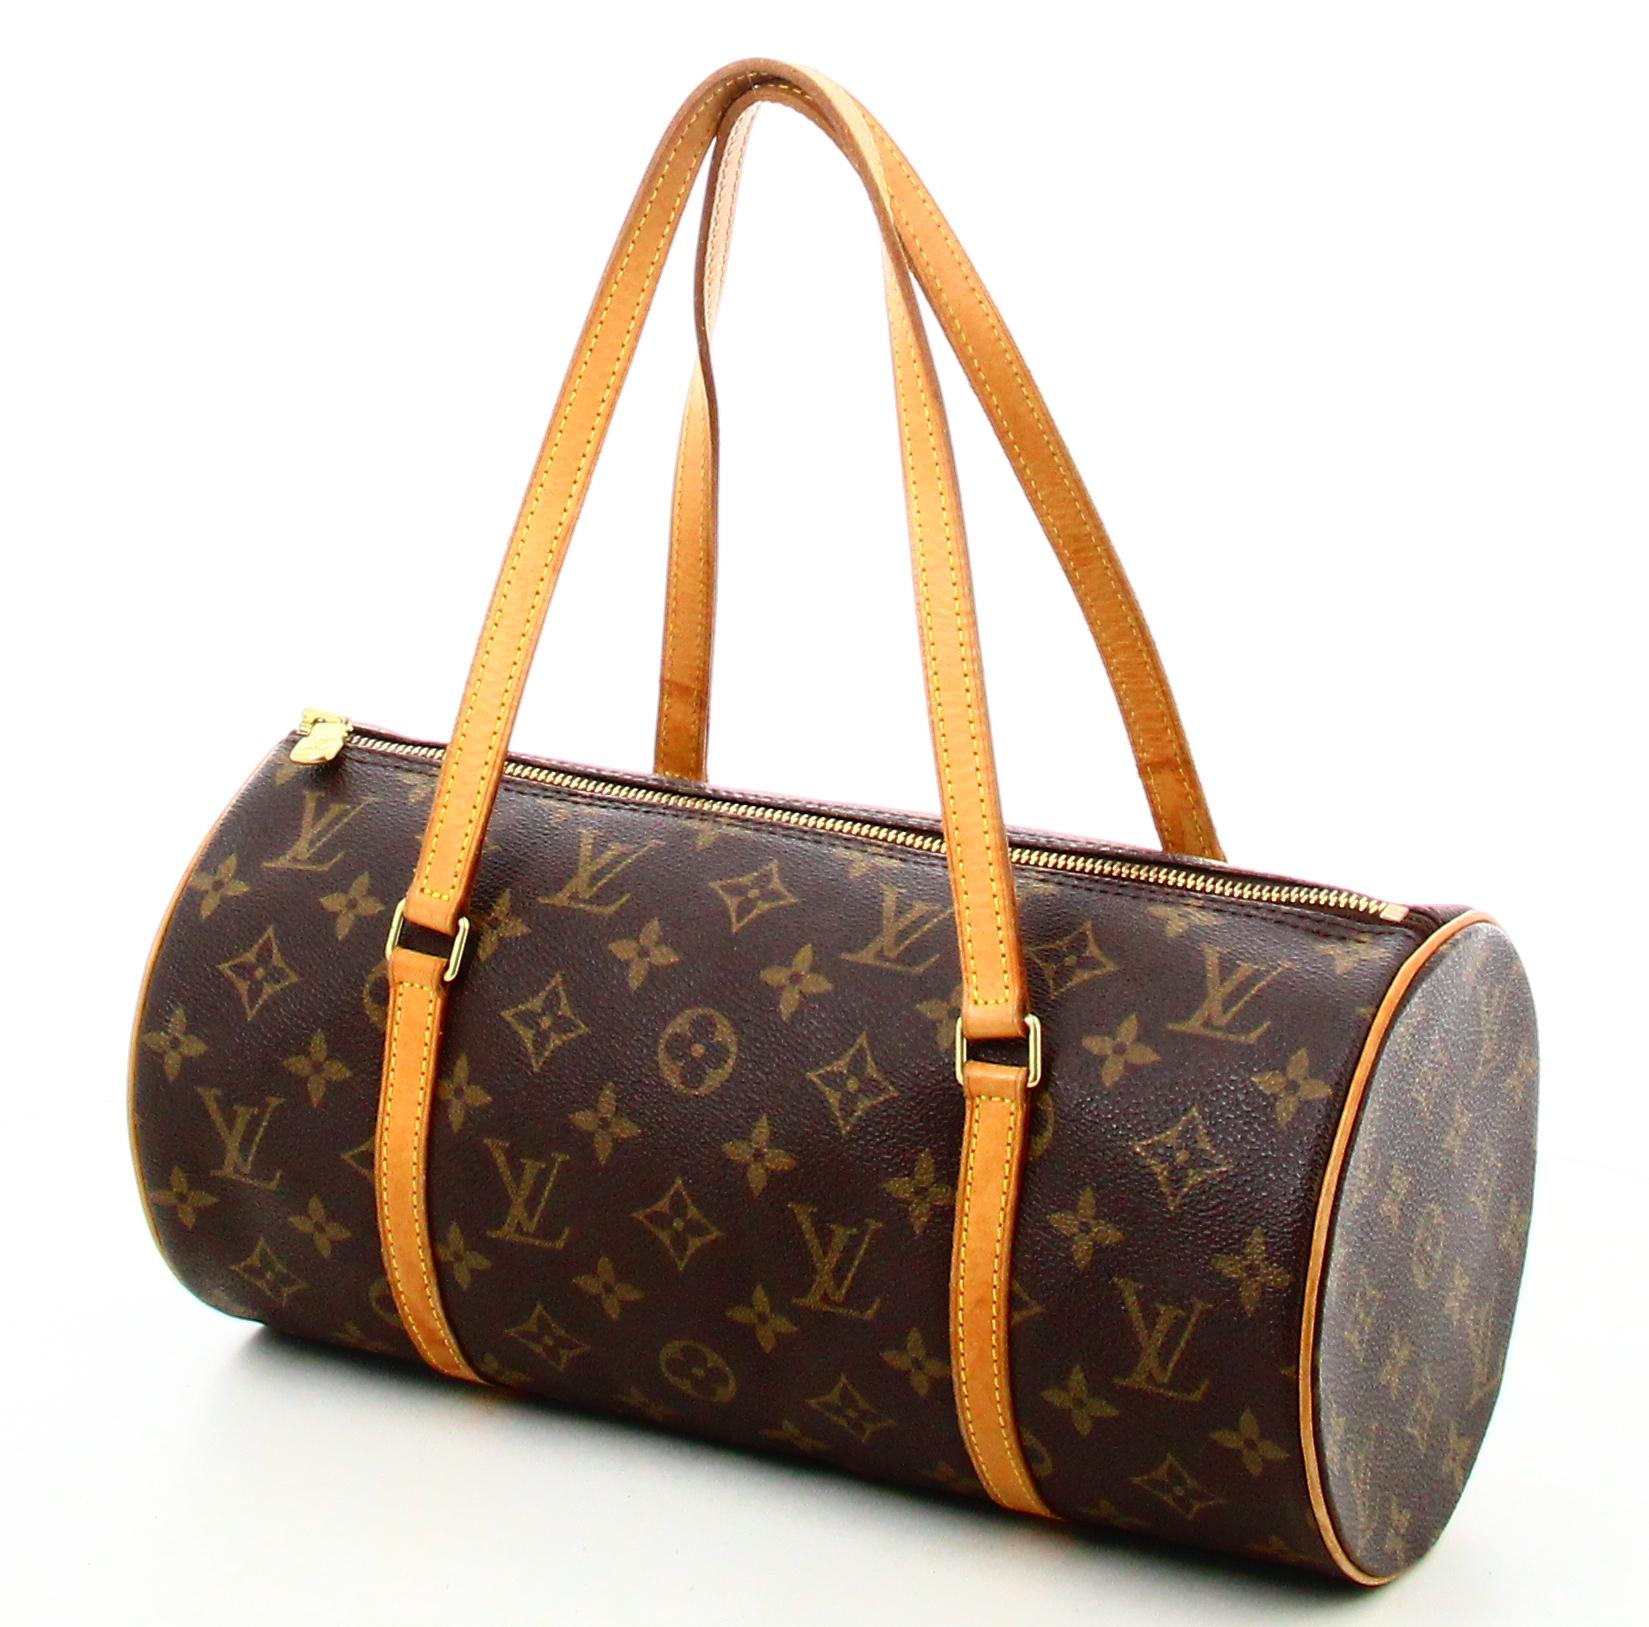 2002 Louis Vuitton Papillon Monogram Canvas Bag

- Very good condition. Shows very slight signs of wear over time. 
- Louis Vuitton Handbag 
- Monogram canvas 
- Two brown leather handles 
- Clasp: golden zipper 